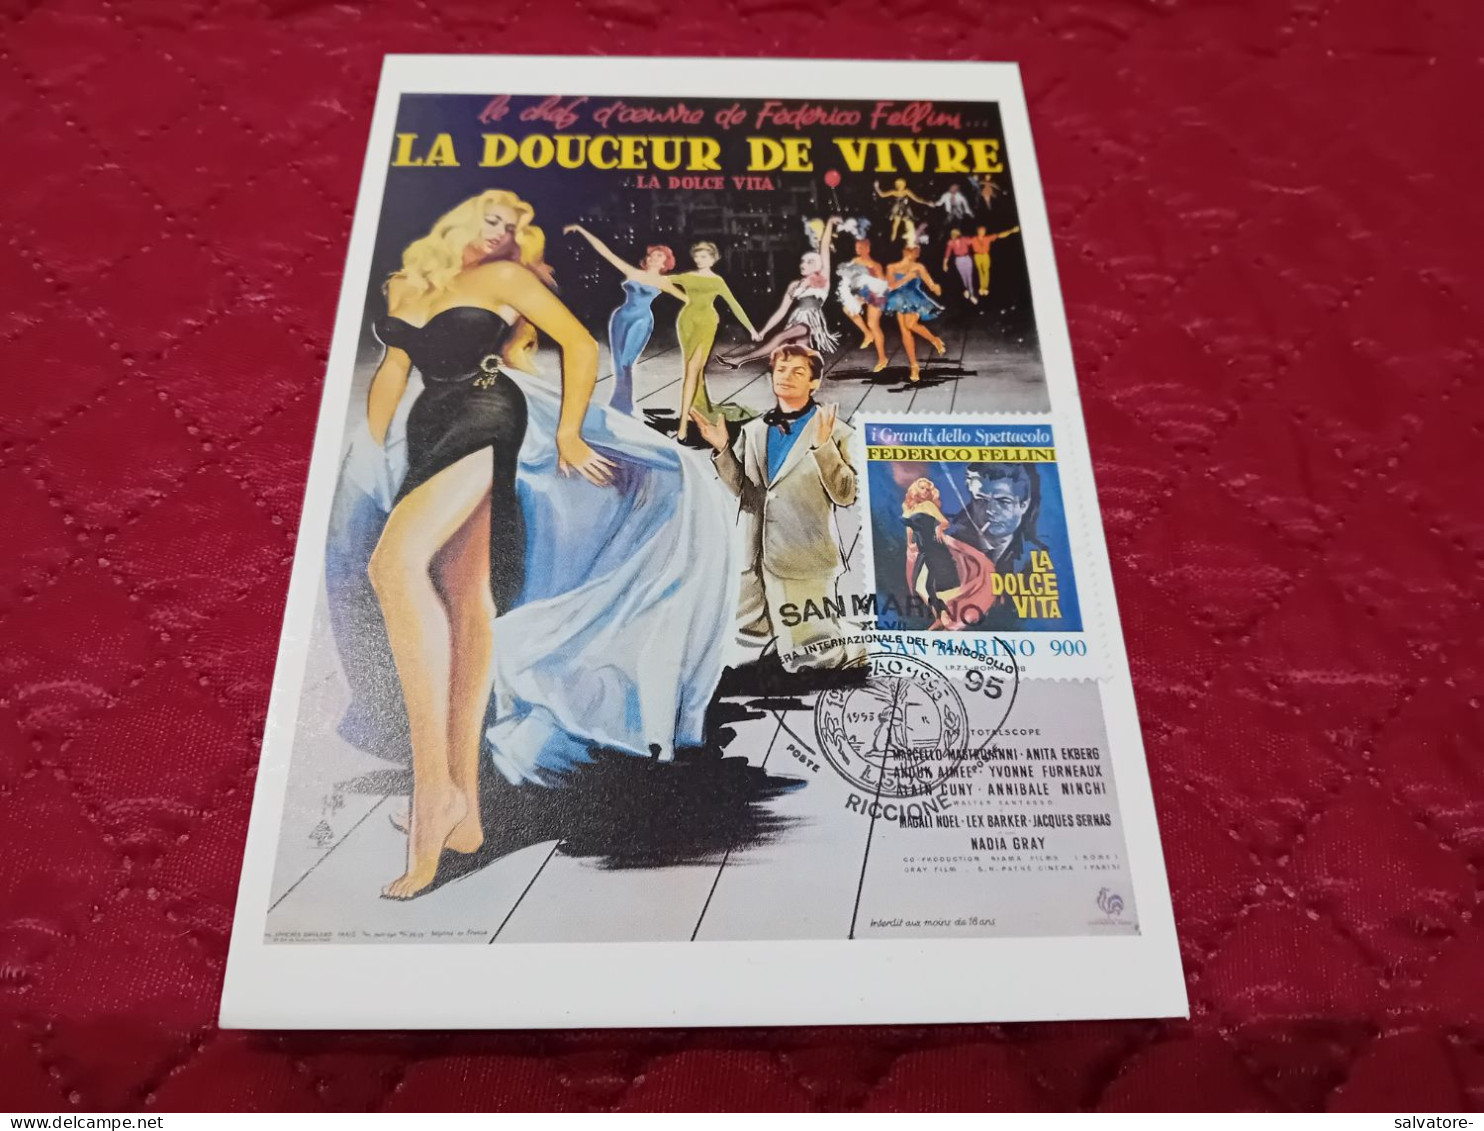 CARTOLINA LA DOUCEUR DE VIVRE- 1994 - Cinema Advertisement